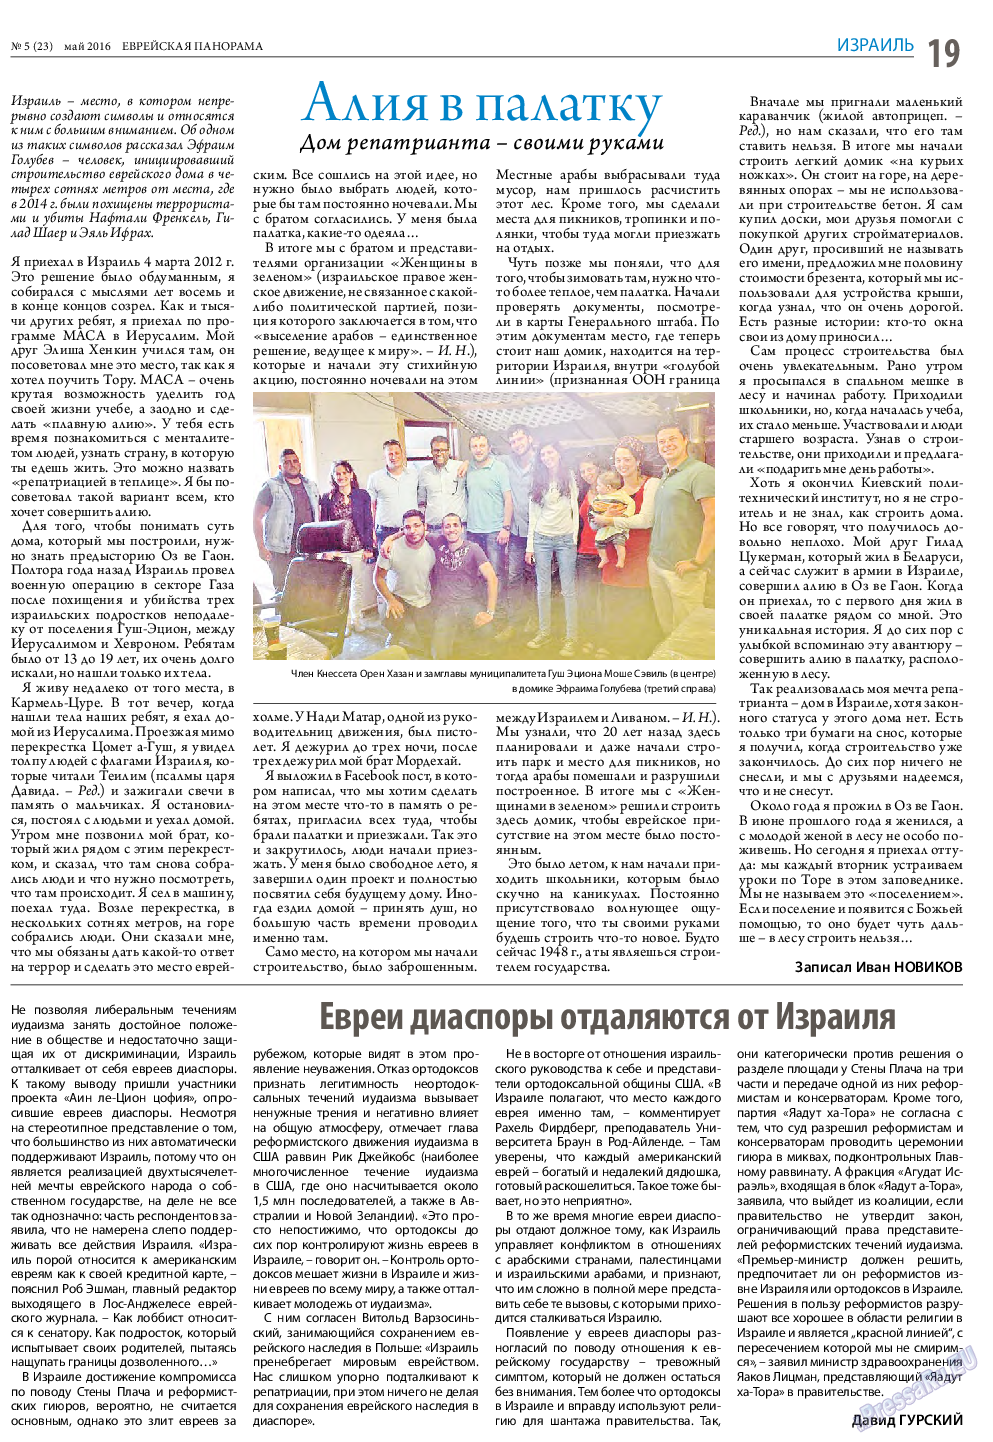 Еврейская панорама, газета. 2016 №5 стр.19